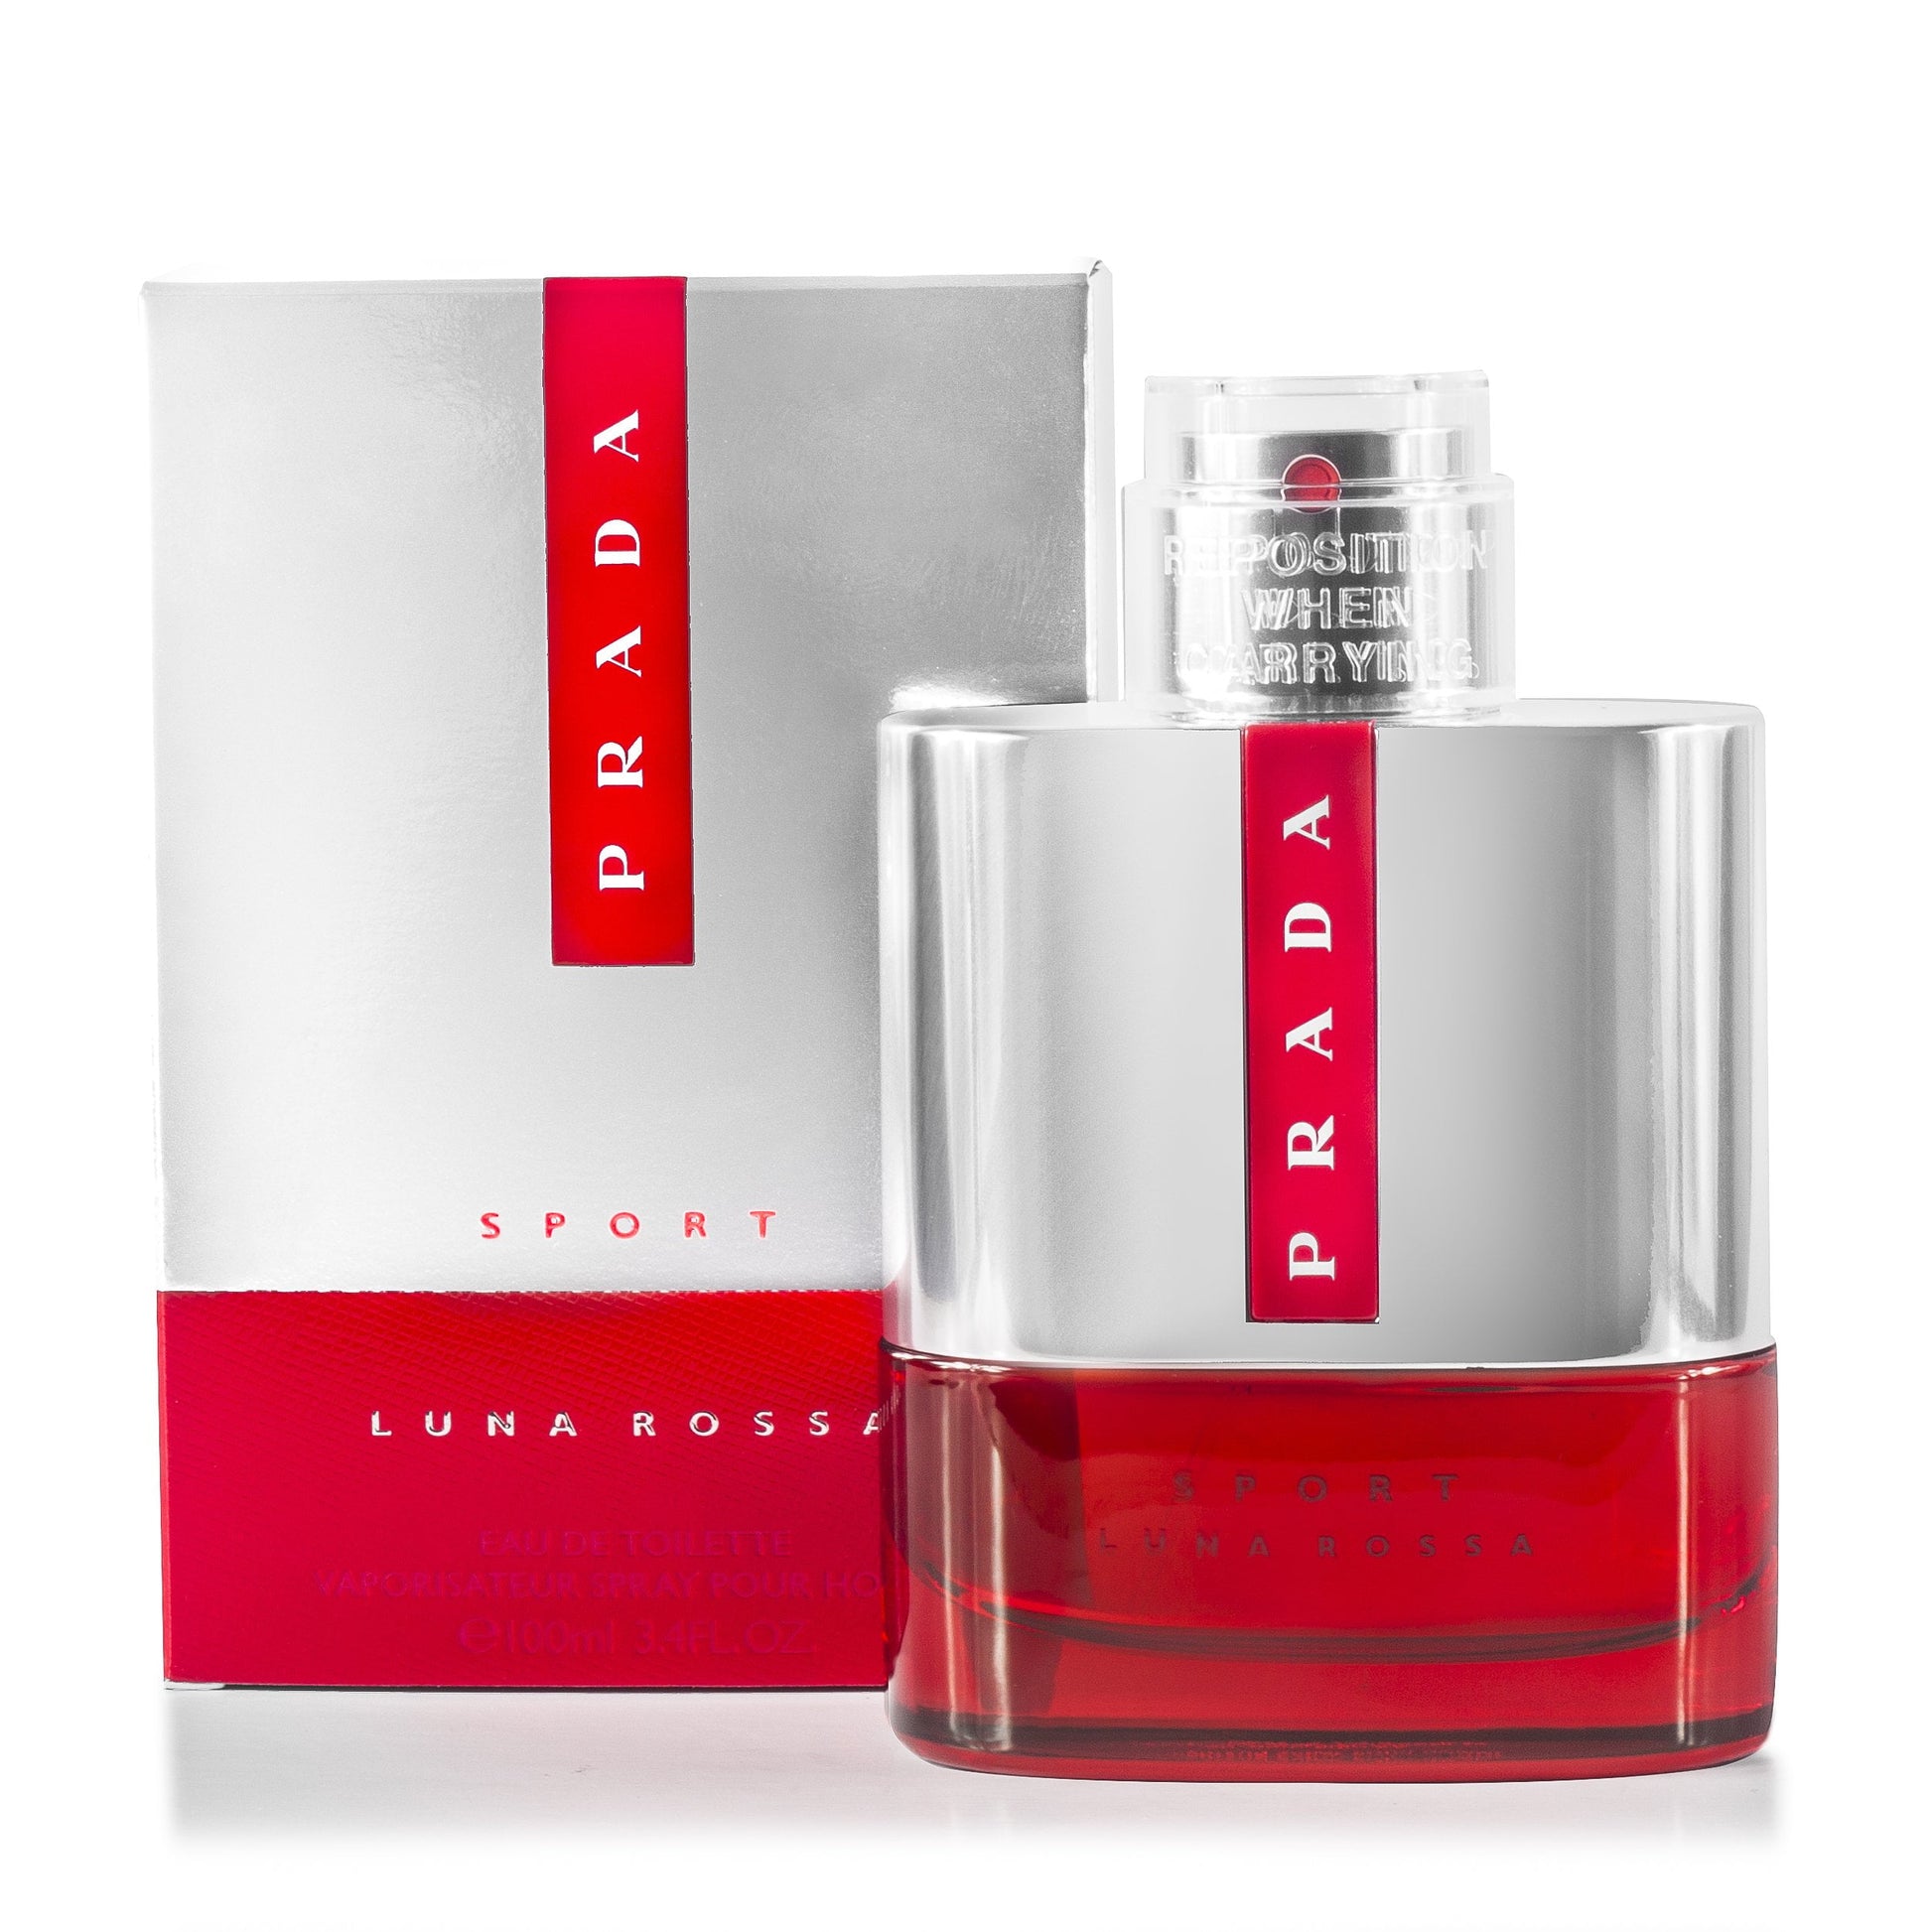 Luna Rossa Sport Eau de Toilette Spray for Men by Prada, Product image 1